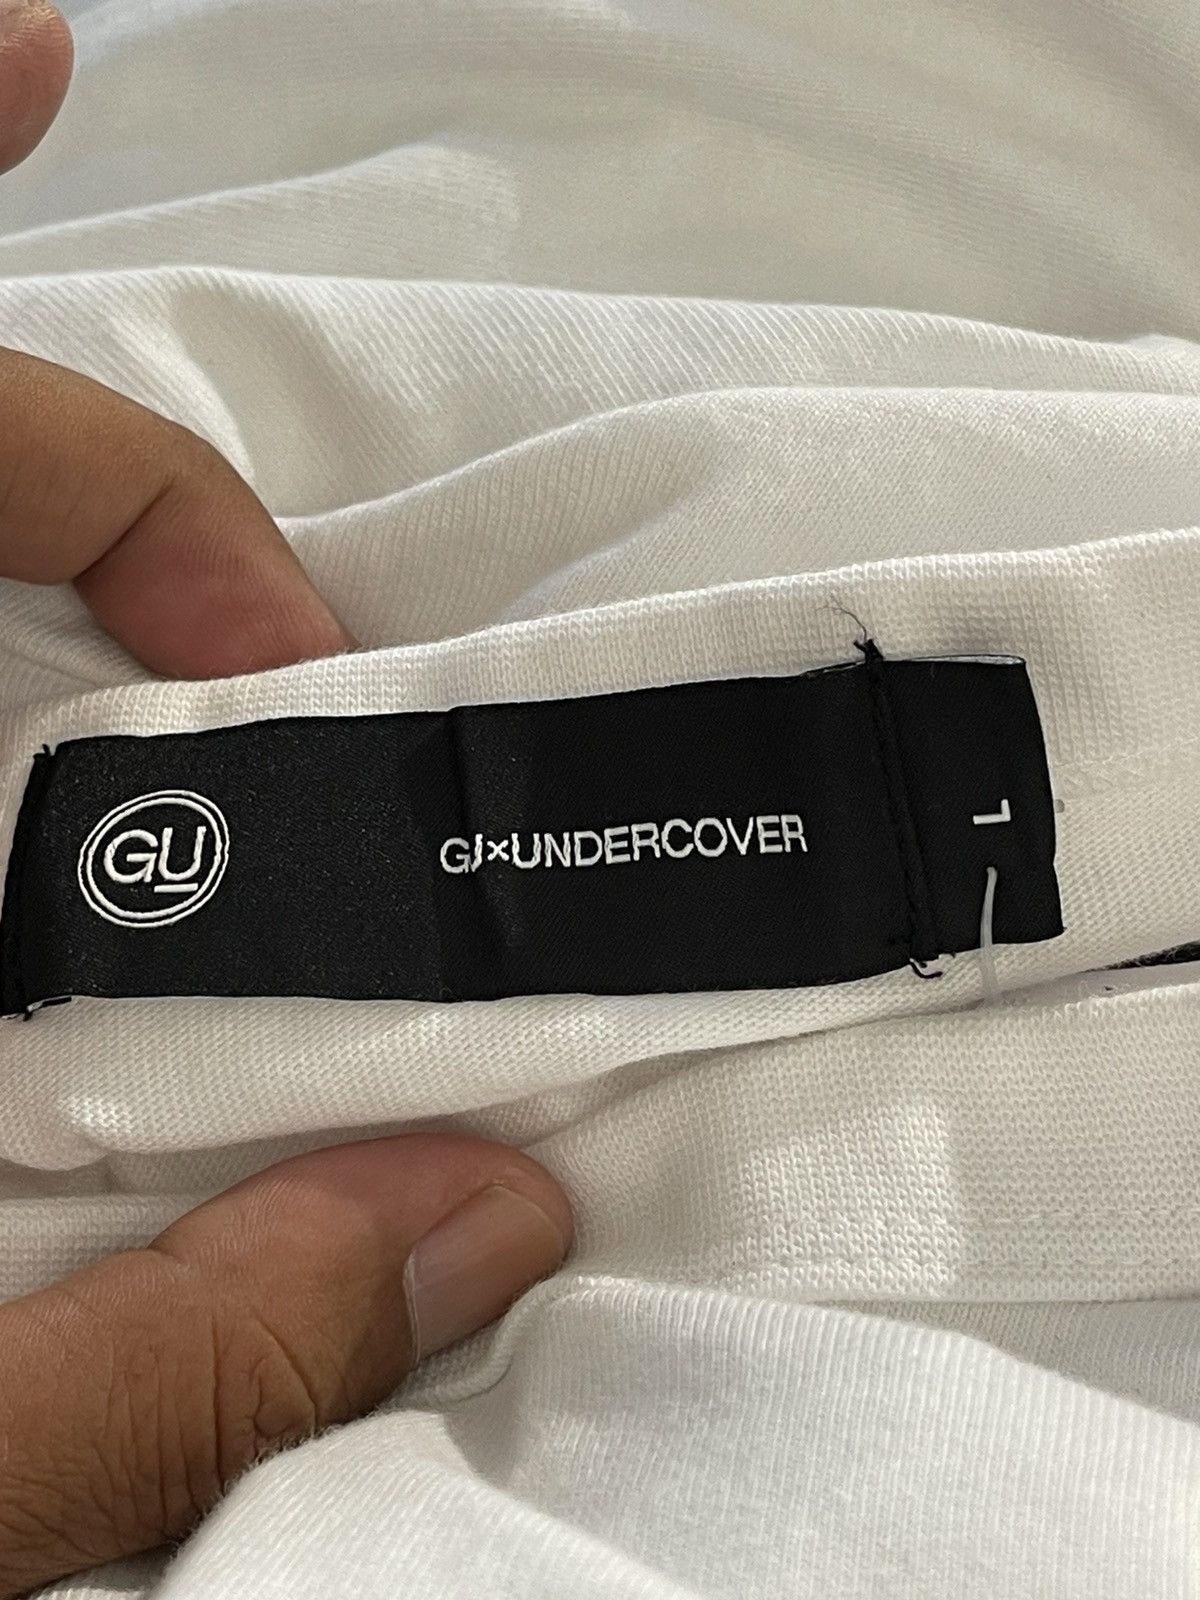 GU undercover Long sleeve - 3